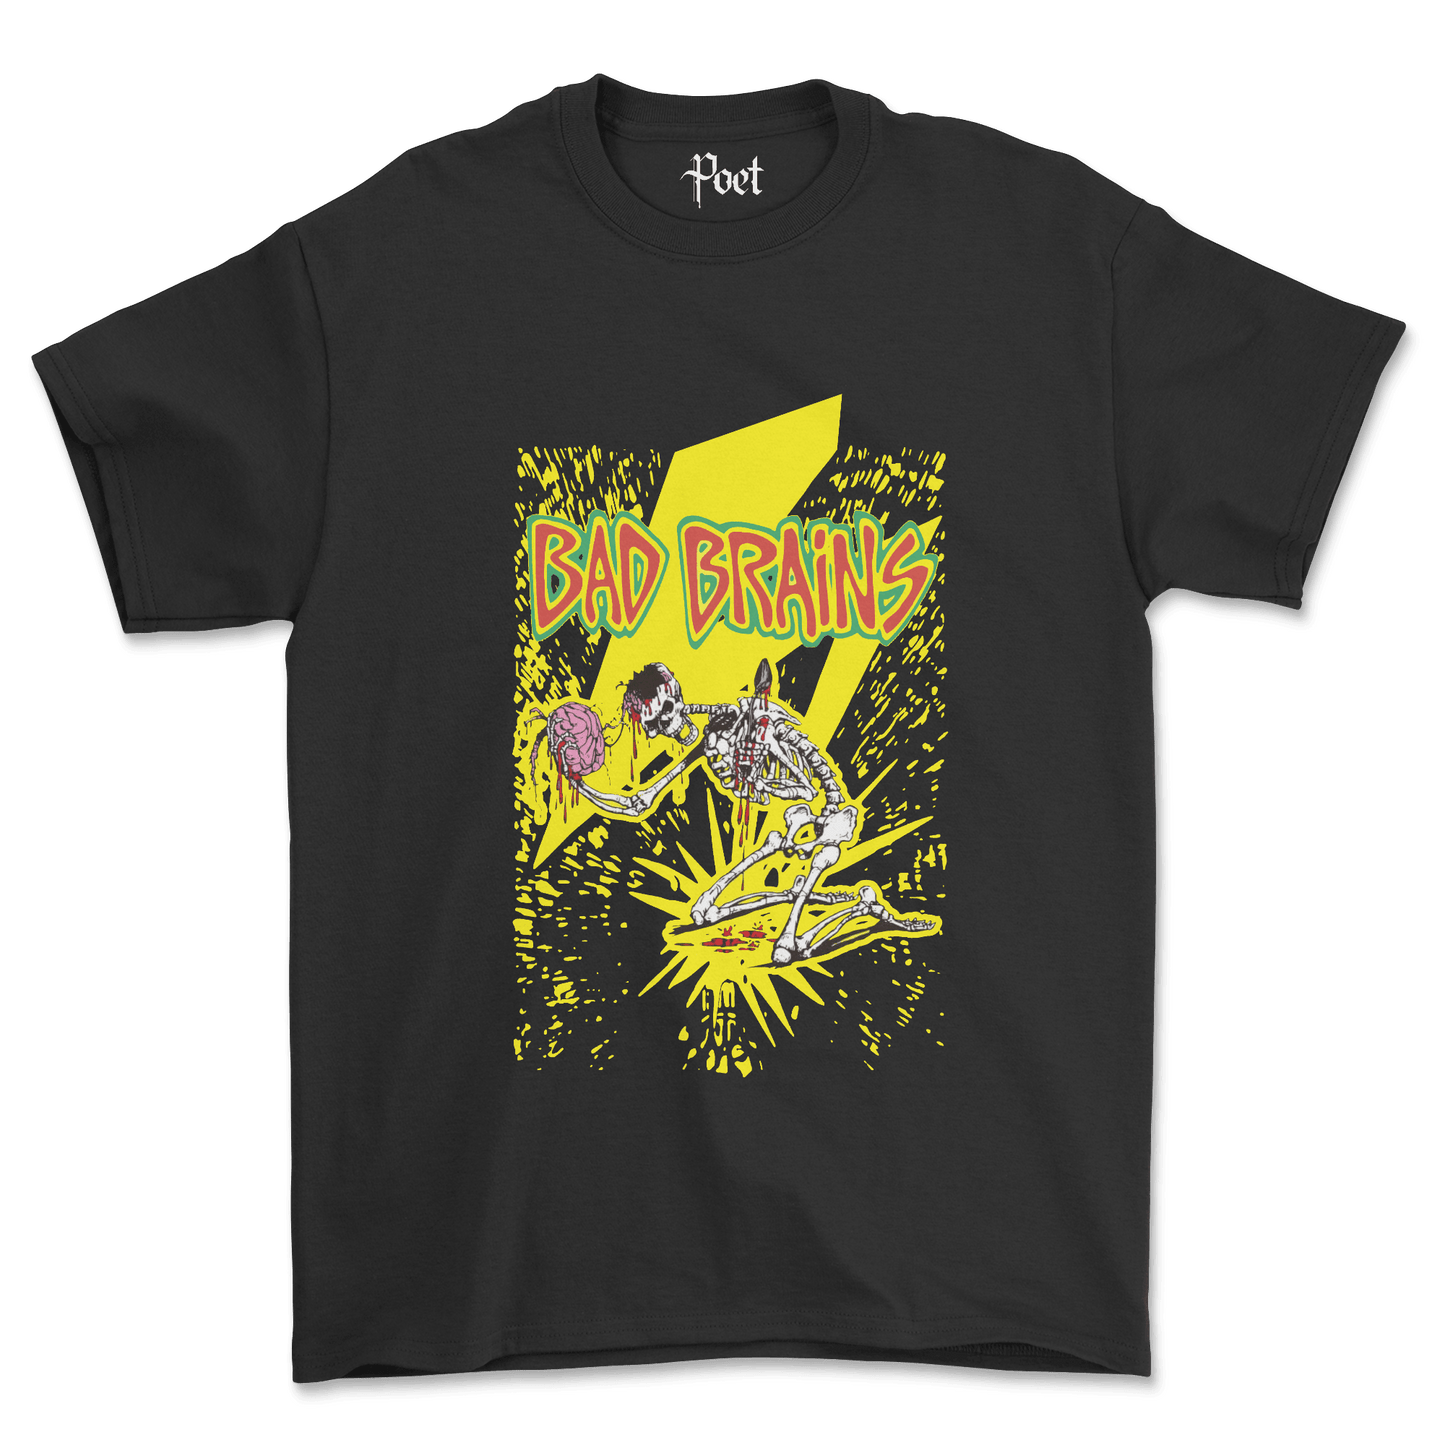 Bad Brains T-Shirt - Poet Archives